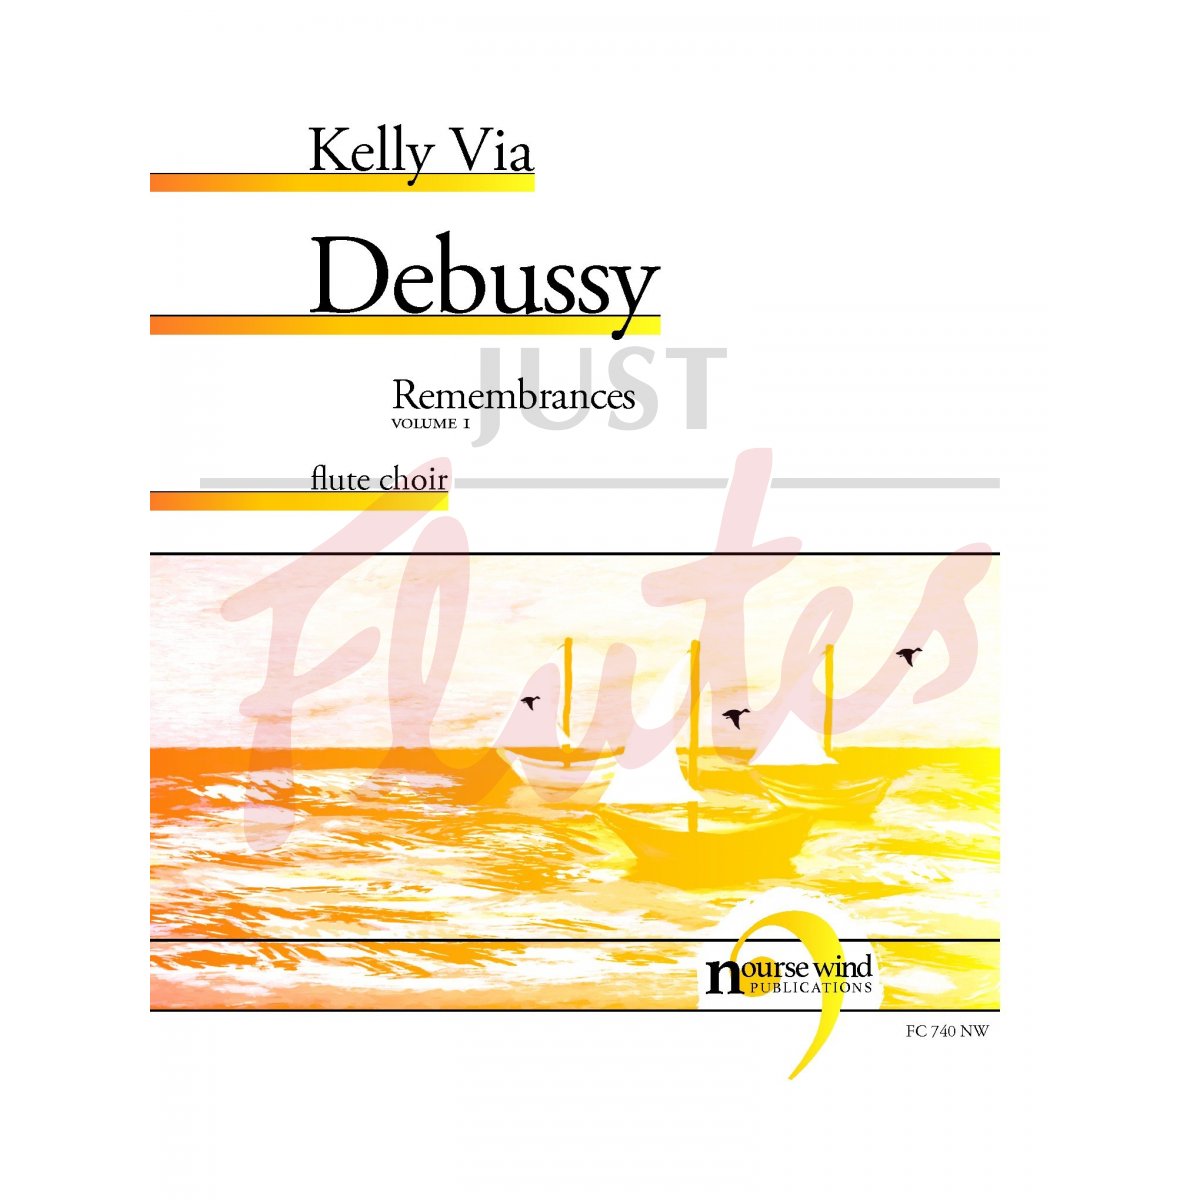 Remembrances Volume 1: Debussy for Flute Choir